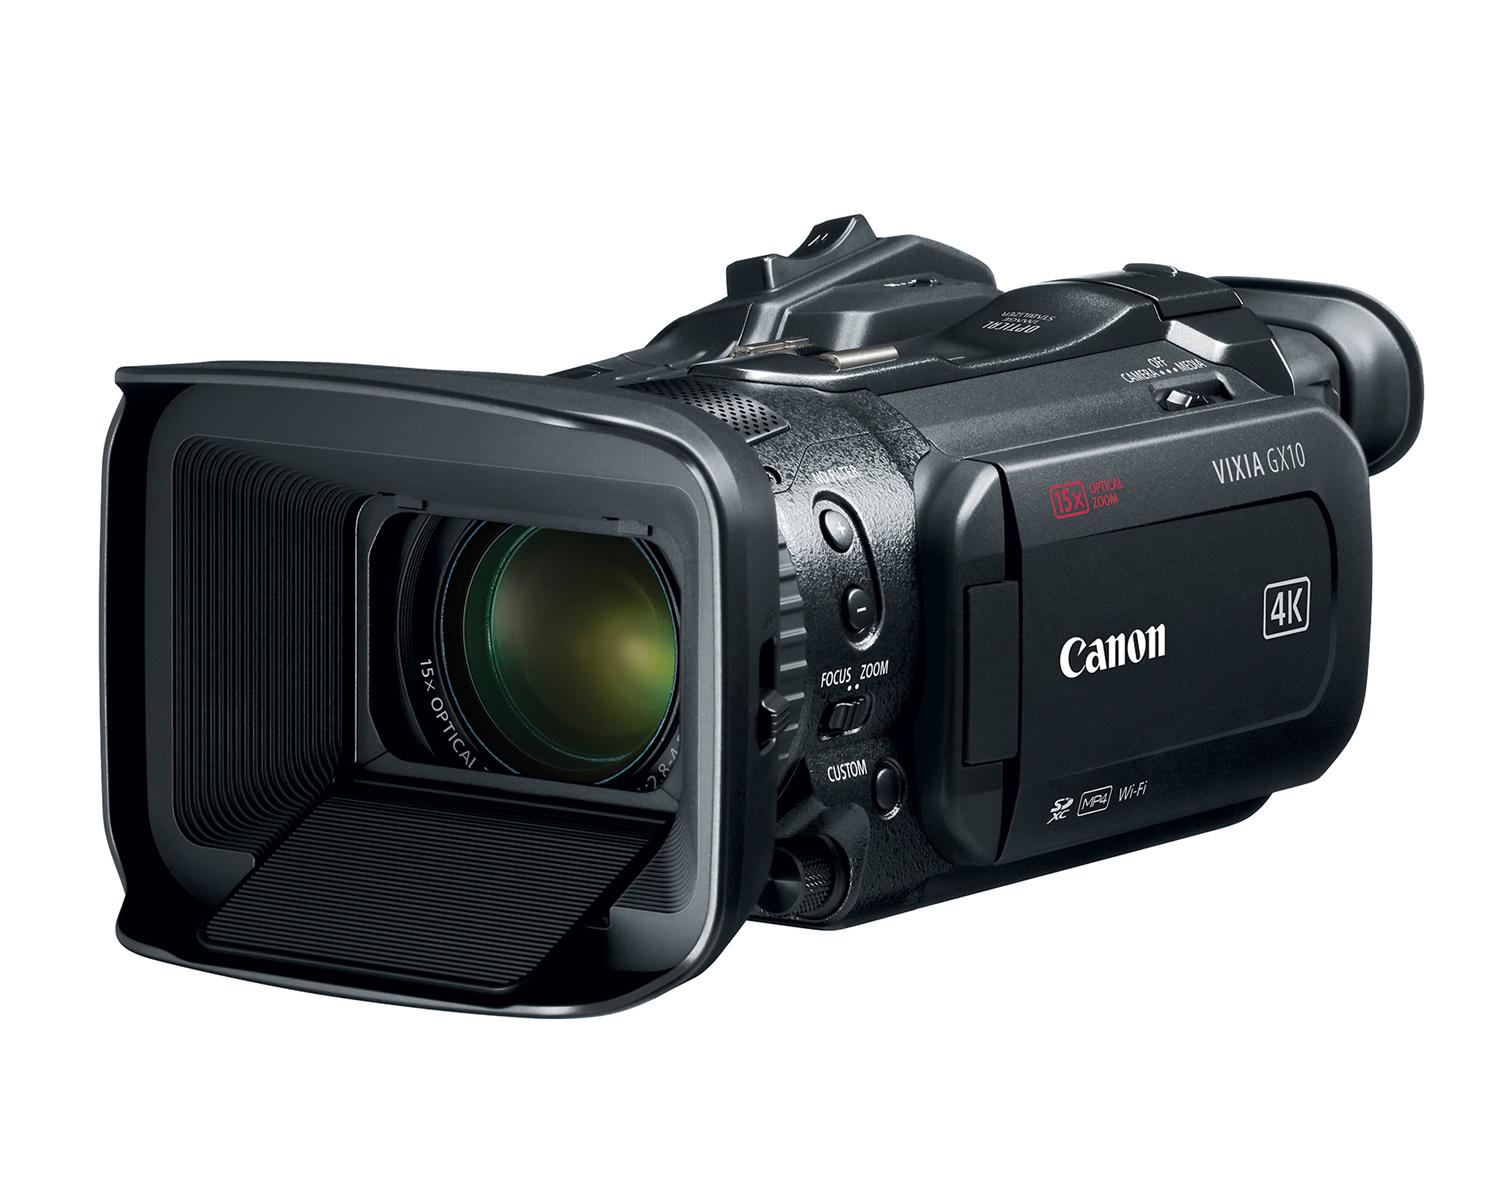 Canon VIXIA GX10 4K UHD Camcorder - 3Q